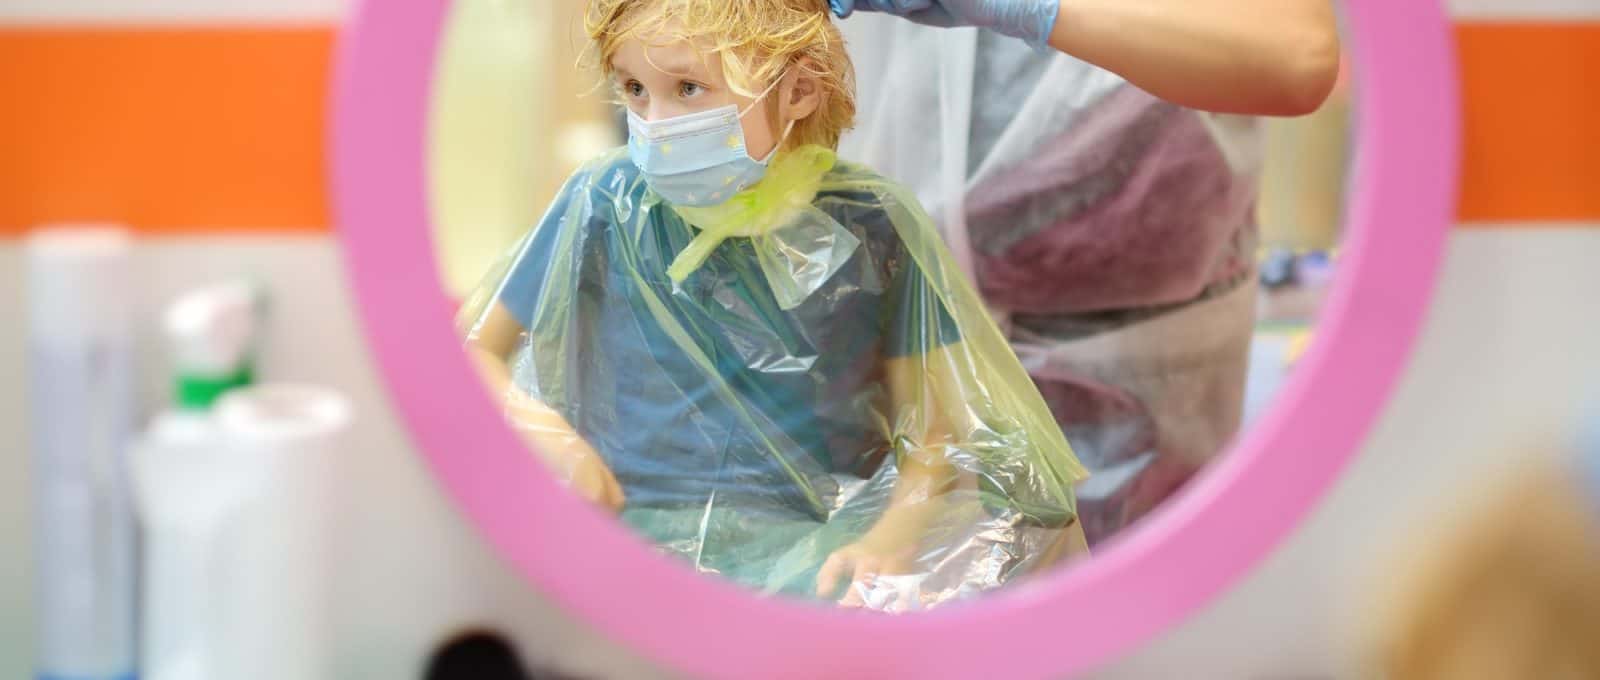 Preschooler boy wearing face mask getting haircut in salon during coronavirus epidemic.